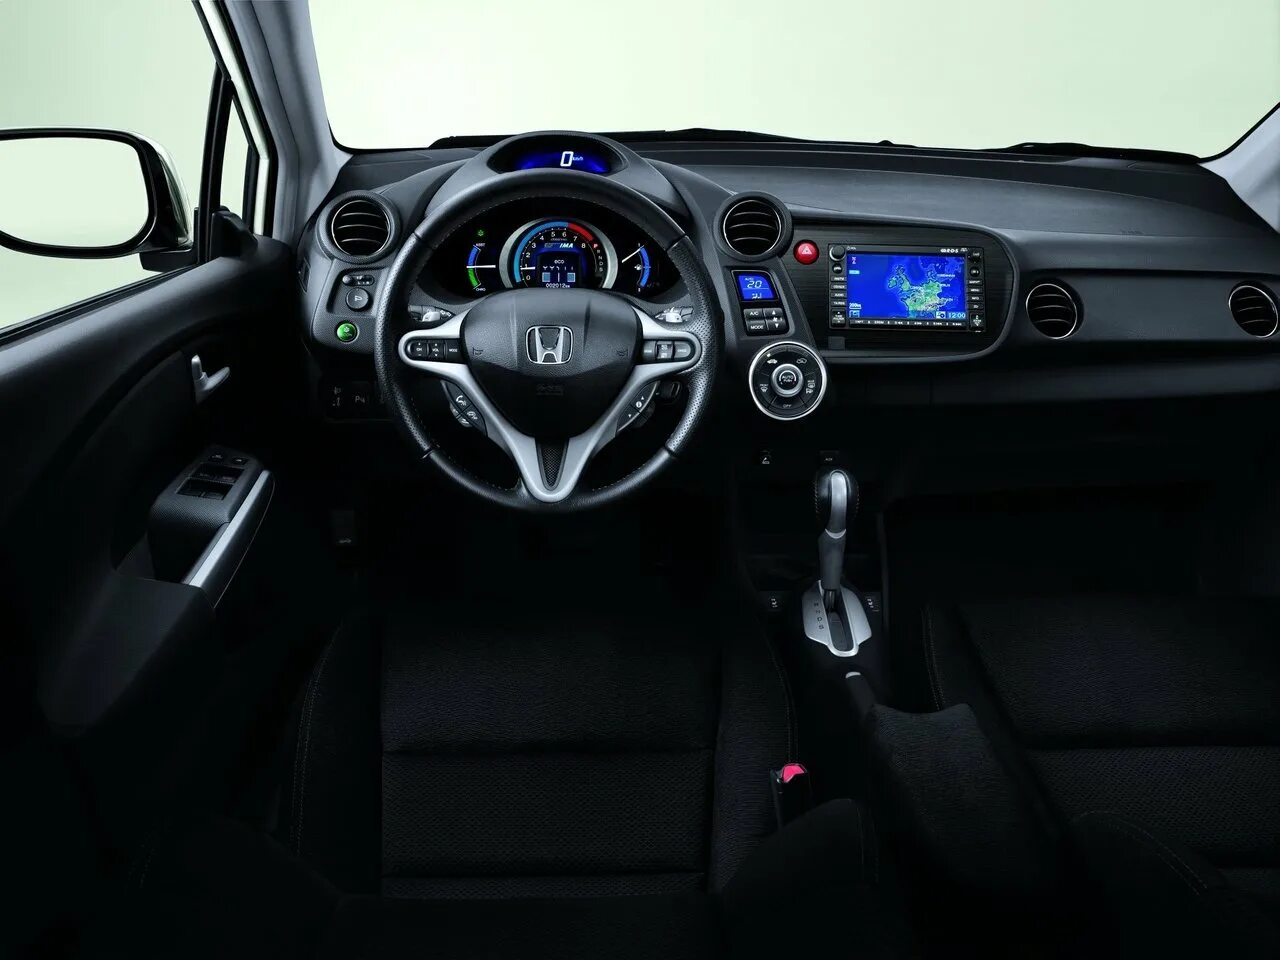 Салон инсайт. Honda Insight 2011. Honda Insight салон. Хонда Инсайт гибрид 2009 салон. Honda Insight 1.5 Hybrid.